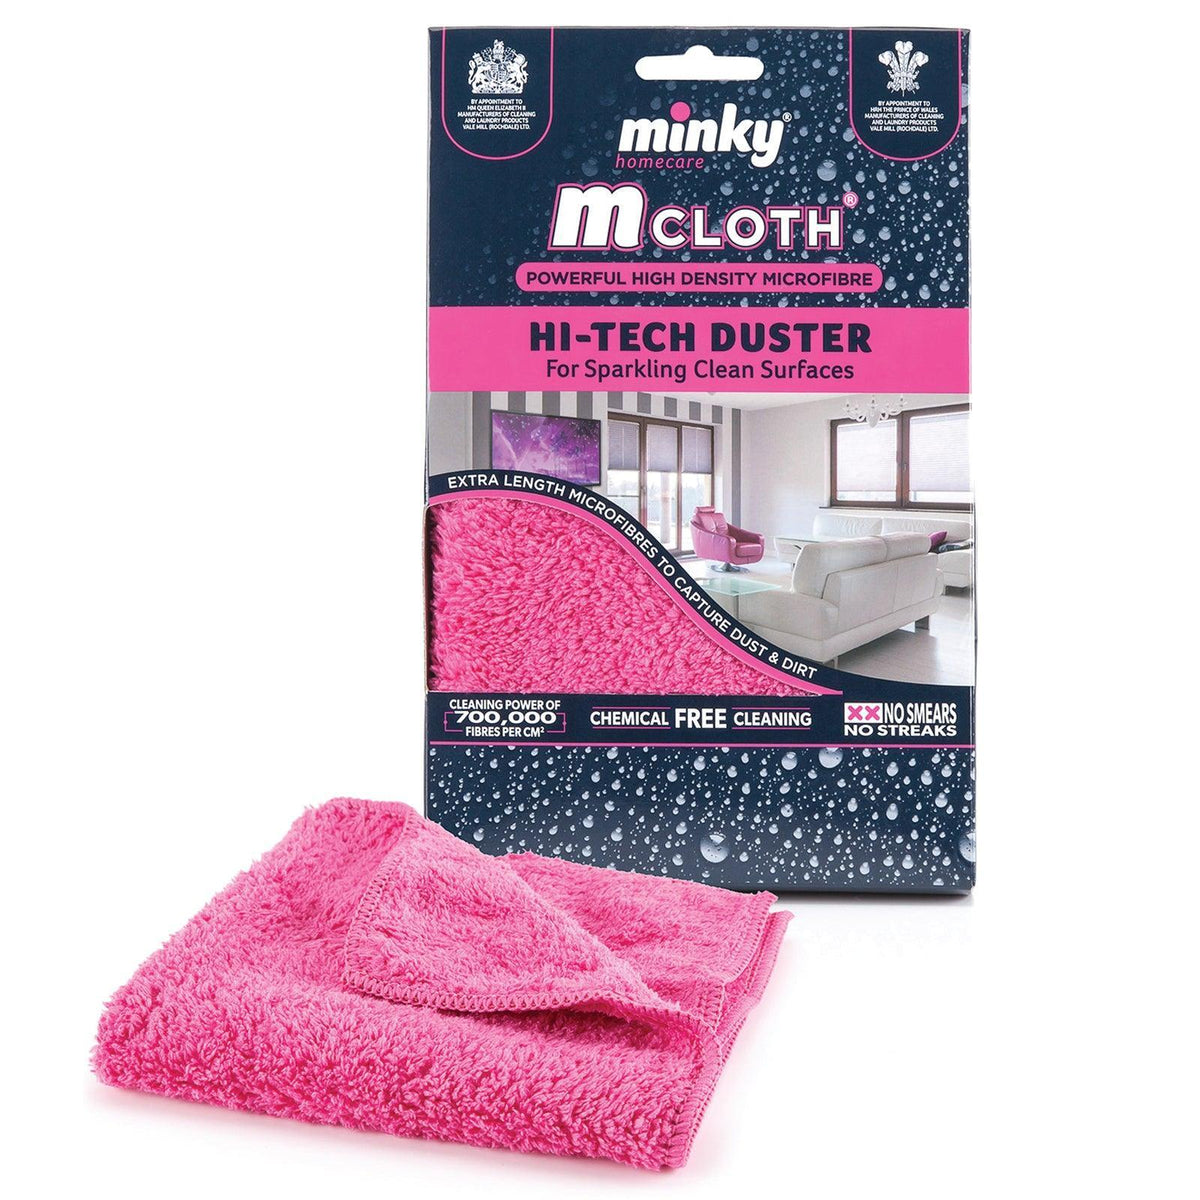 Minky M Cloth Hi-Tech Duster - Choice Stores